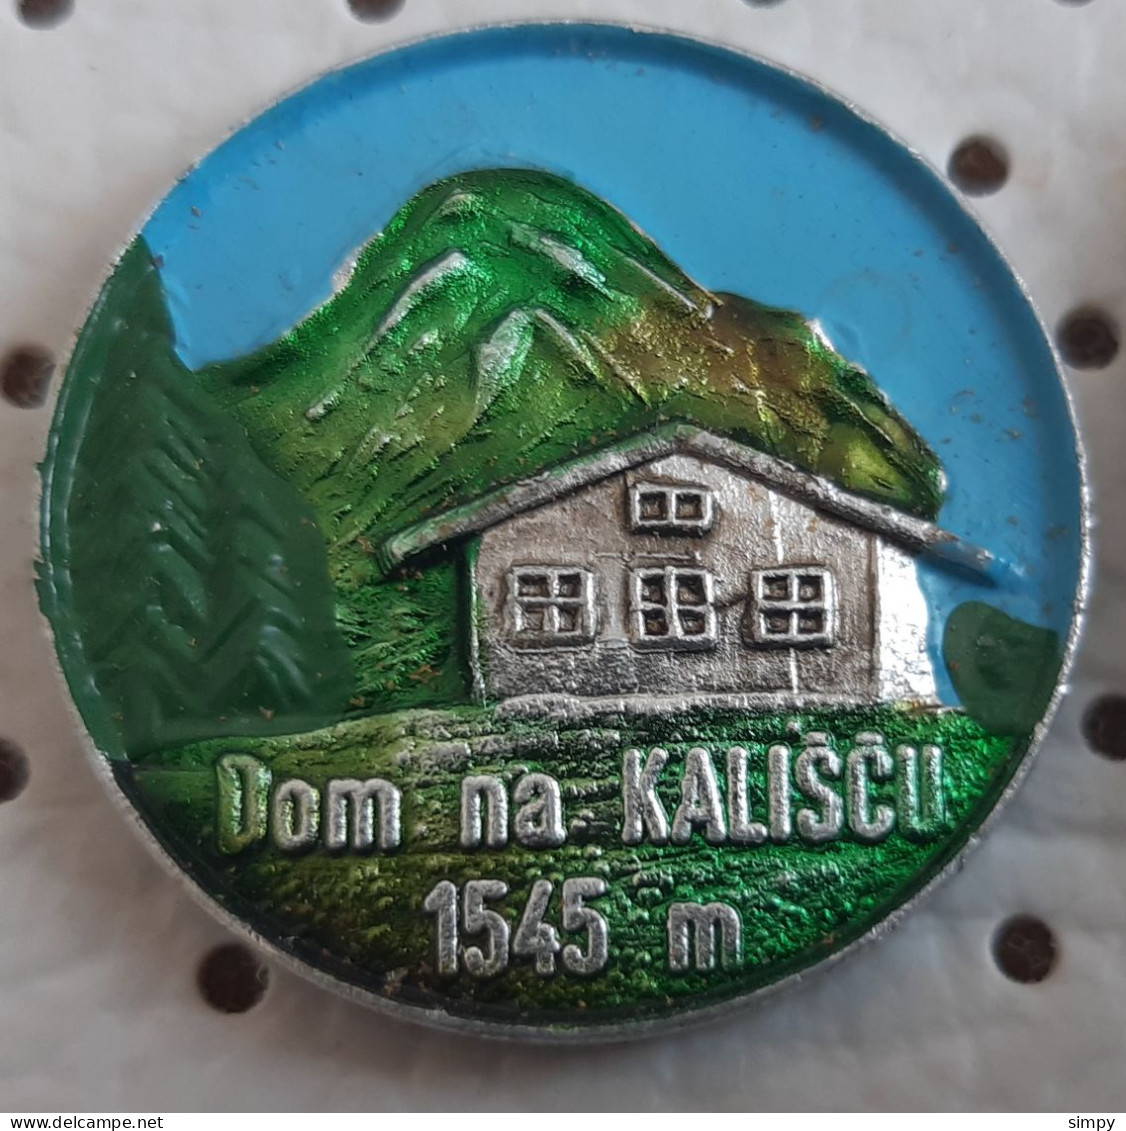 DOm Na Kaliscu  Mountain Lodge Alpinism, Mountaineering Slovenia Pin - Alpinismus, Bergsteigen